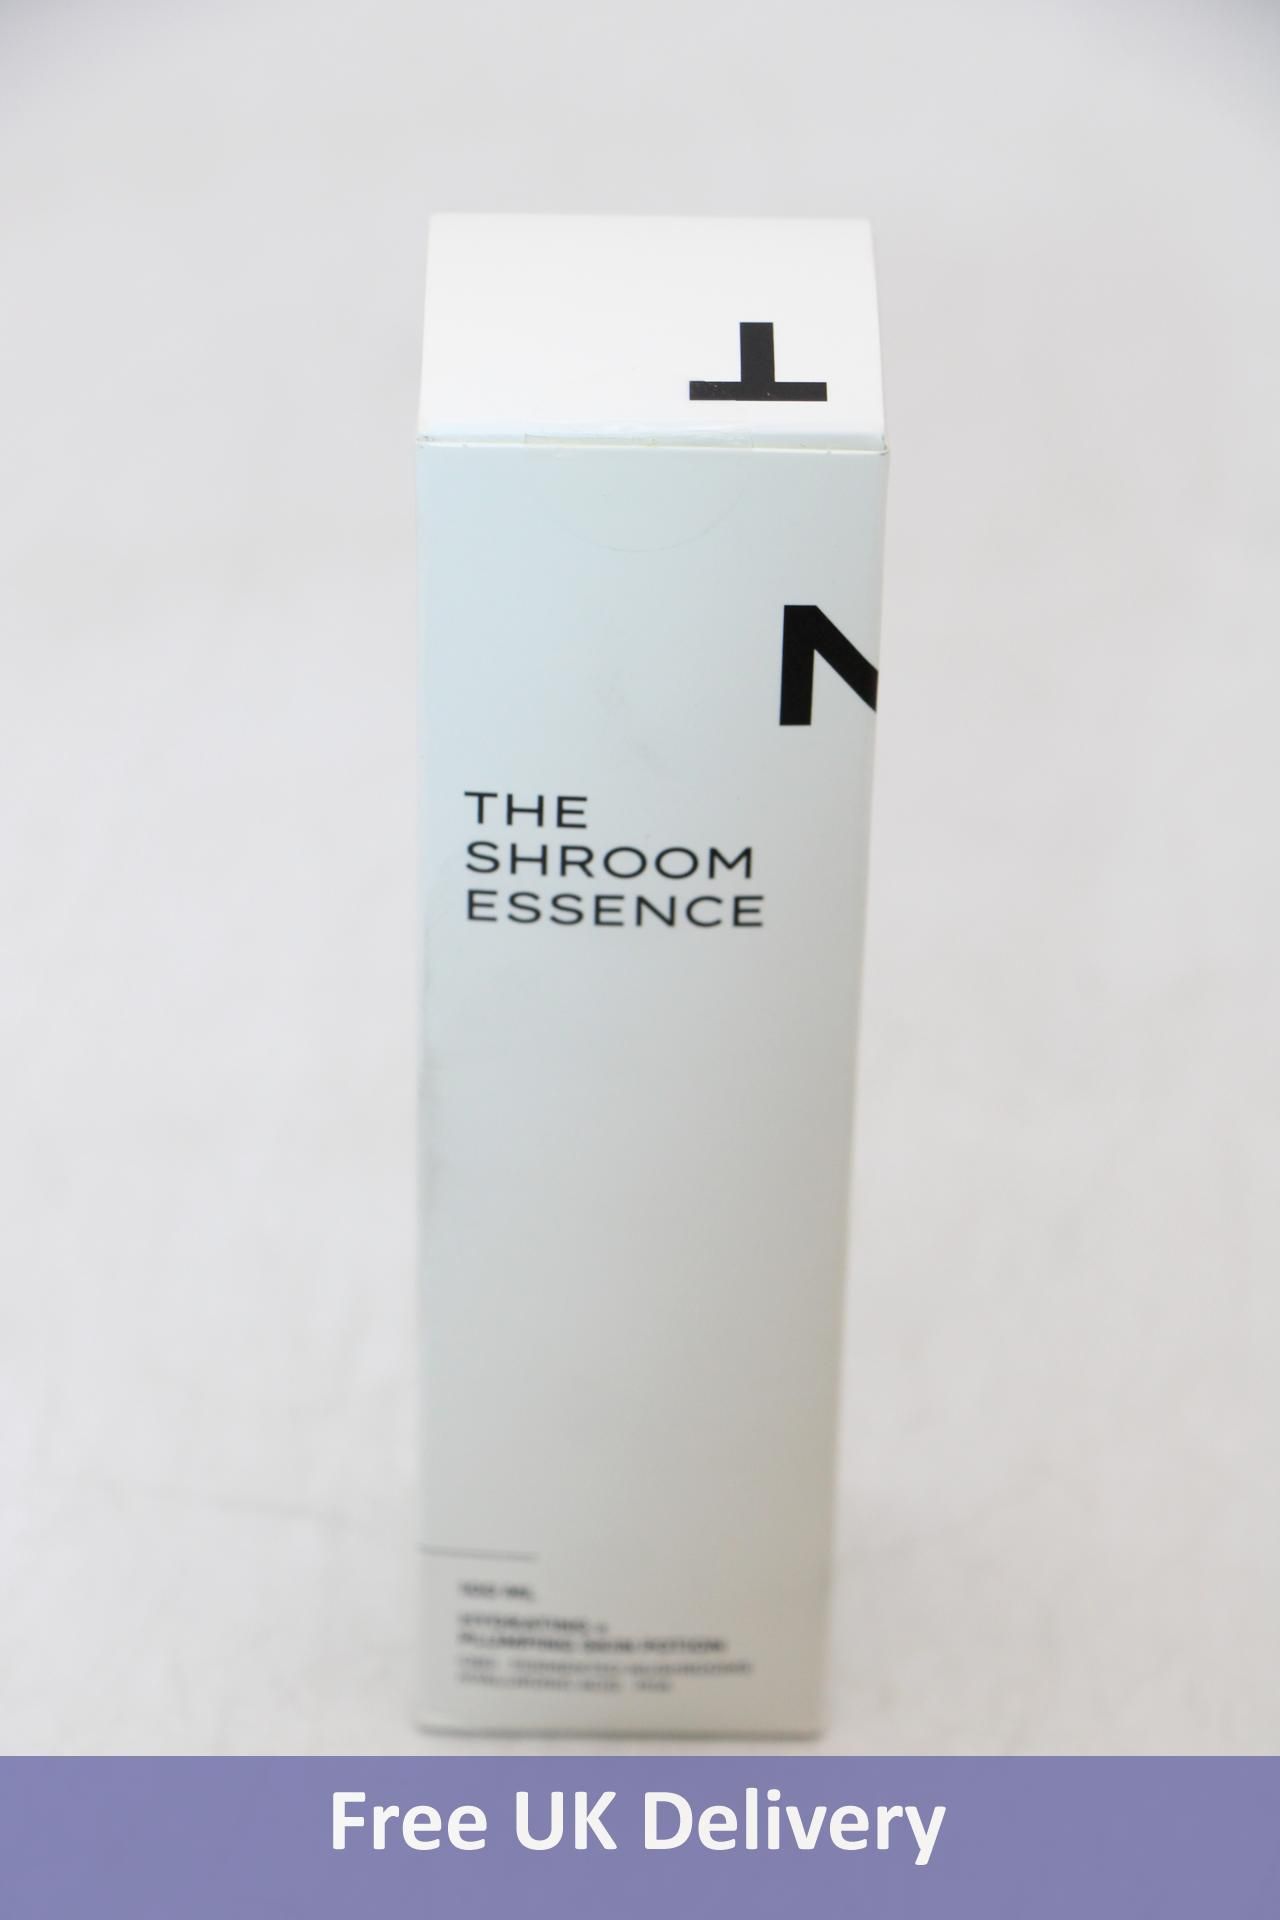 Ten Mantle The Shroom Essence Bottle Hydrating x Plumping Skin Potion Cbd, Size 100ml - Image 5 of 10